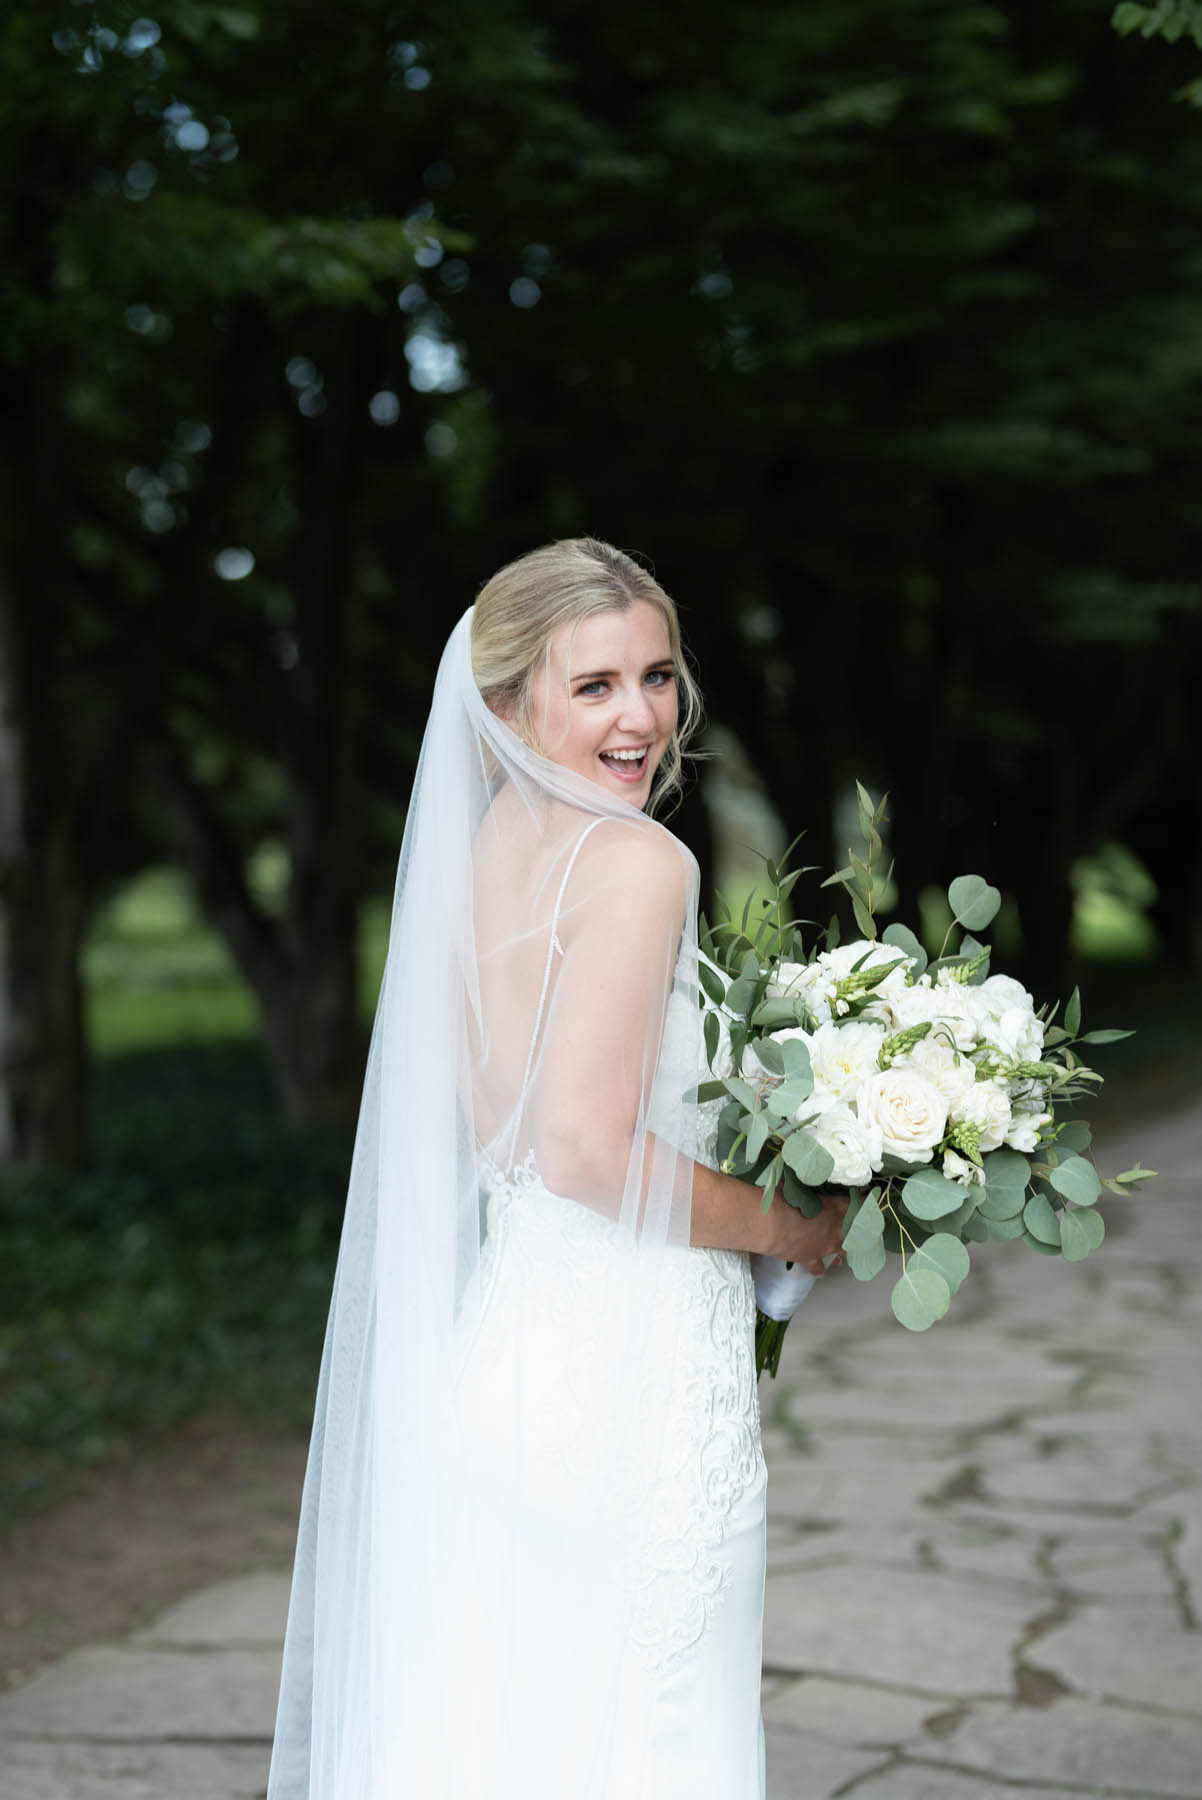 Captivating Wedding Moments Captured by Photographer - Allison + Mark